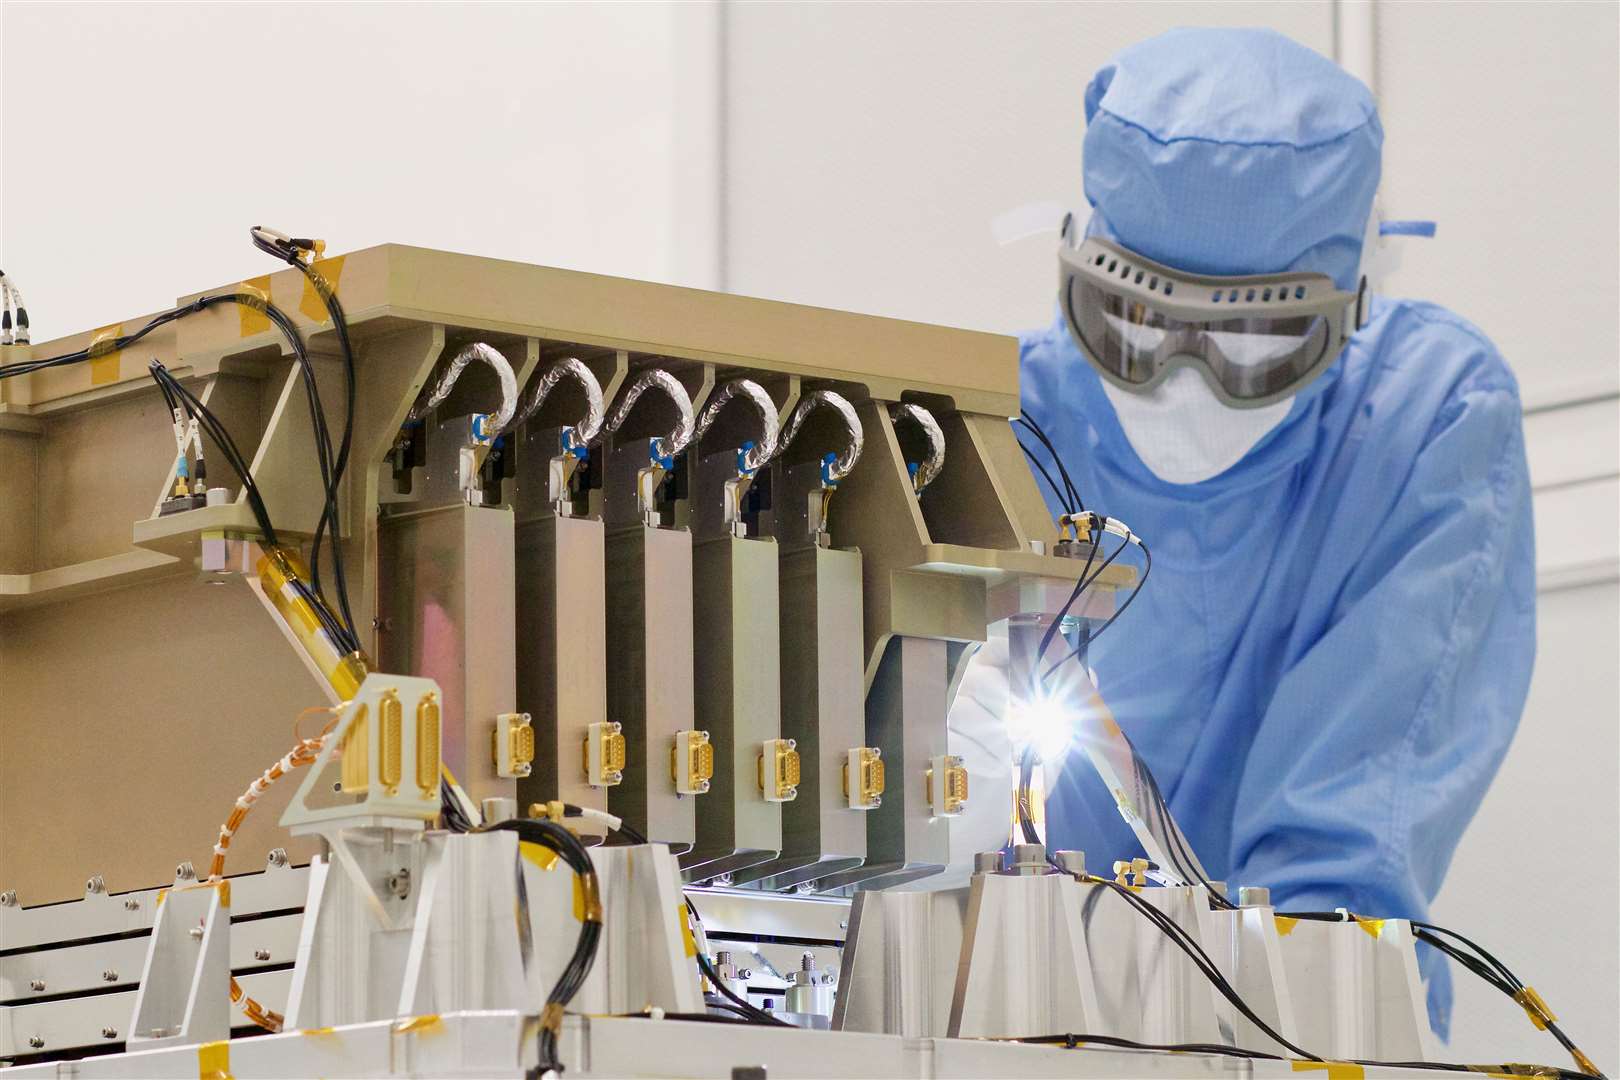 Euclid’s VIS instrument being inspected during vibration testing at Centre Spatial de Liege, Belgium (CEA/ESA/PA)